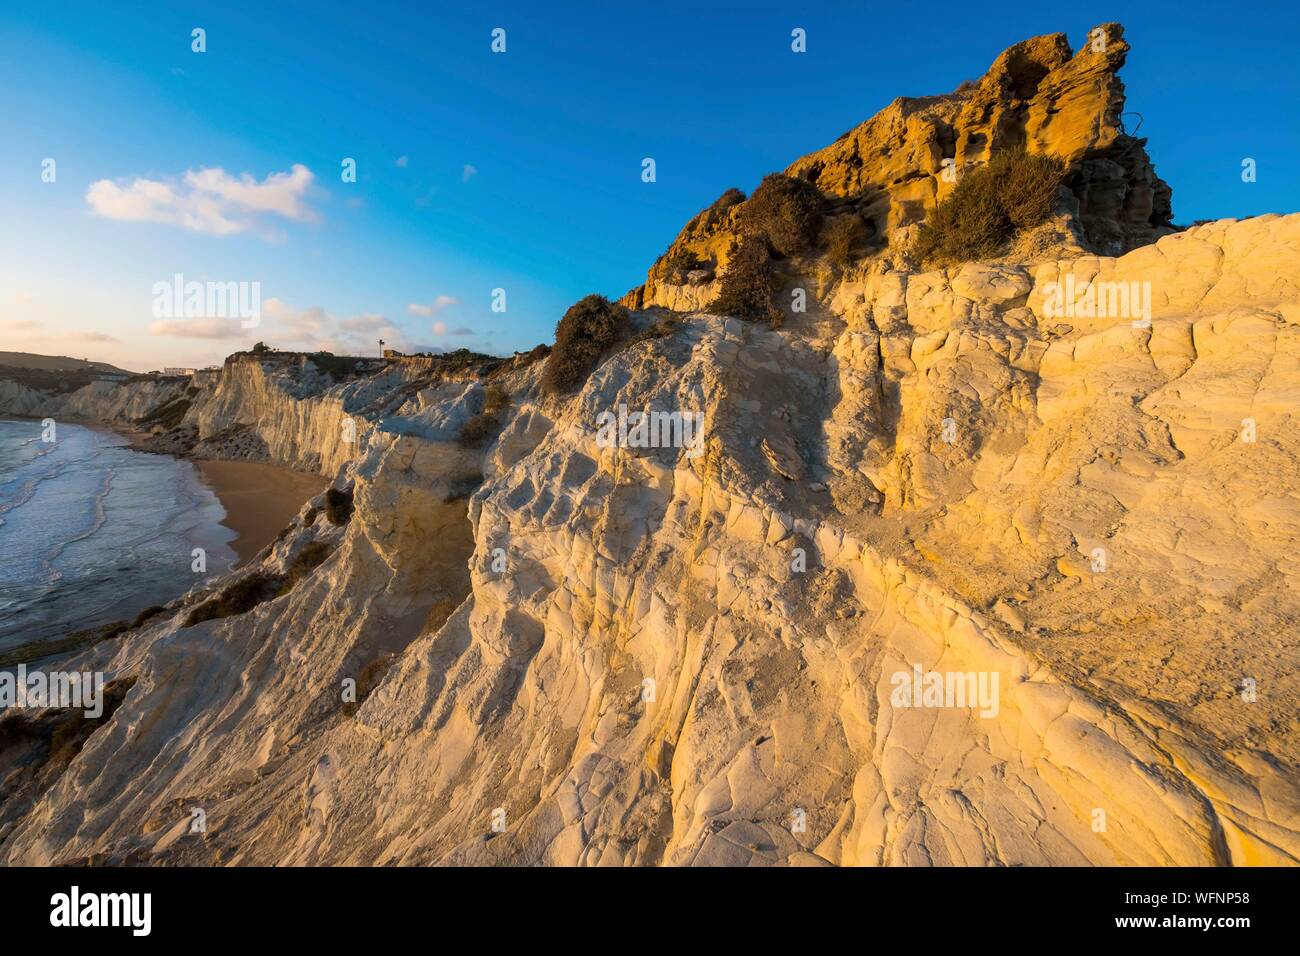 Italy, Sicily, Realmonte, Scala dei Turchi, or Turks stairway, cliff of white limestone overlooking the sea Stock Photo